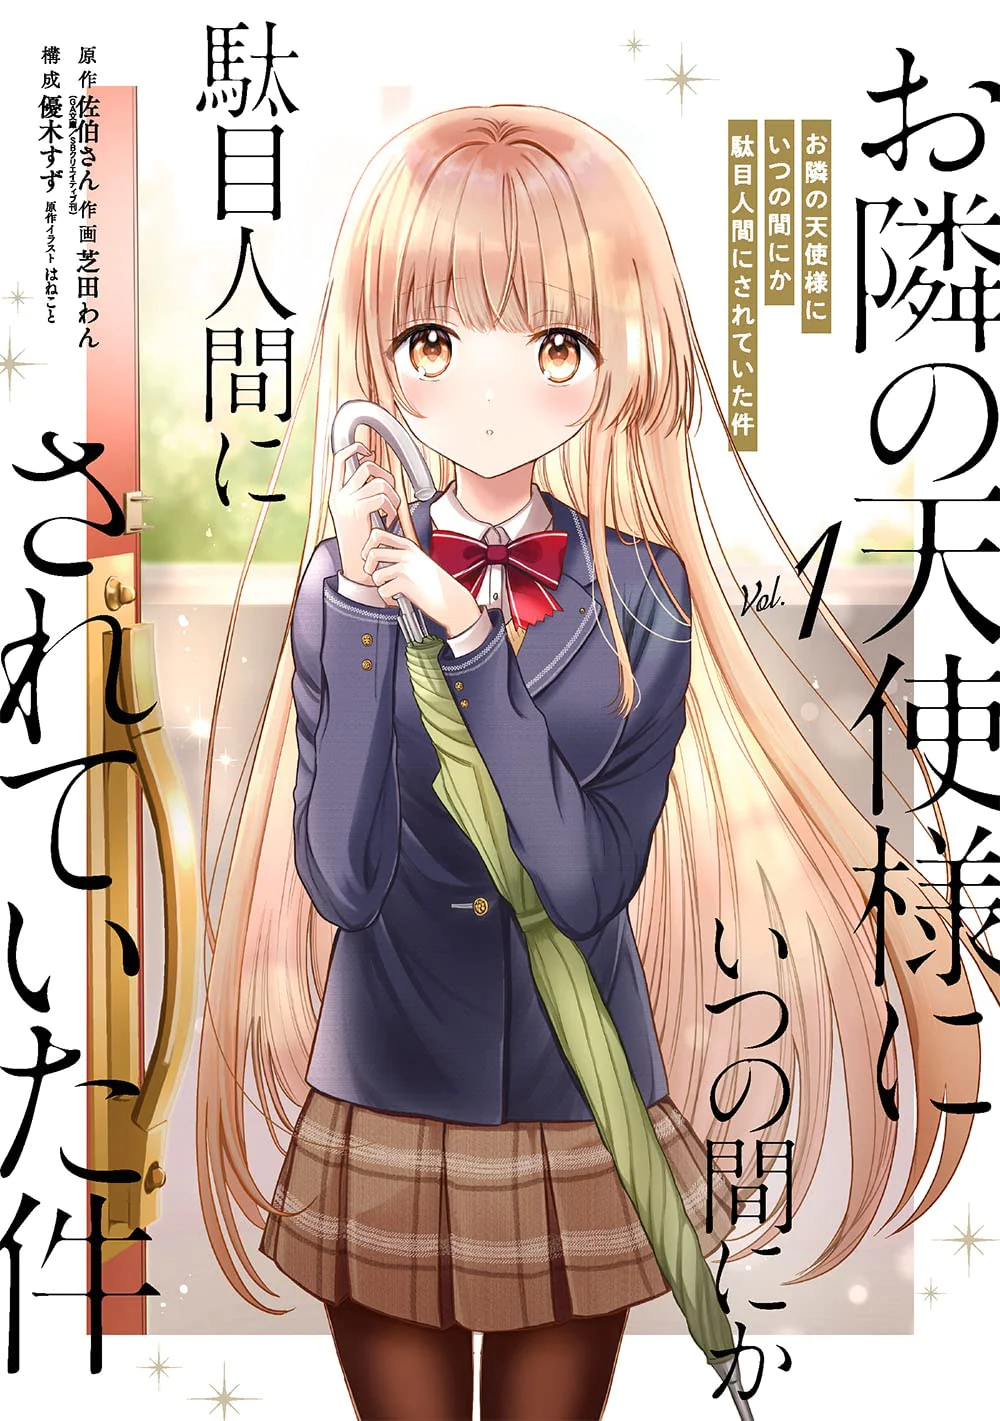 The Angel Next Door Spoils Me Rotten (Manga) by Wan Shibata (Art), Suzu Yuki (Adaption), SAEKISAN (Story), Hanekoto (Character Designs)